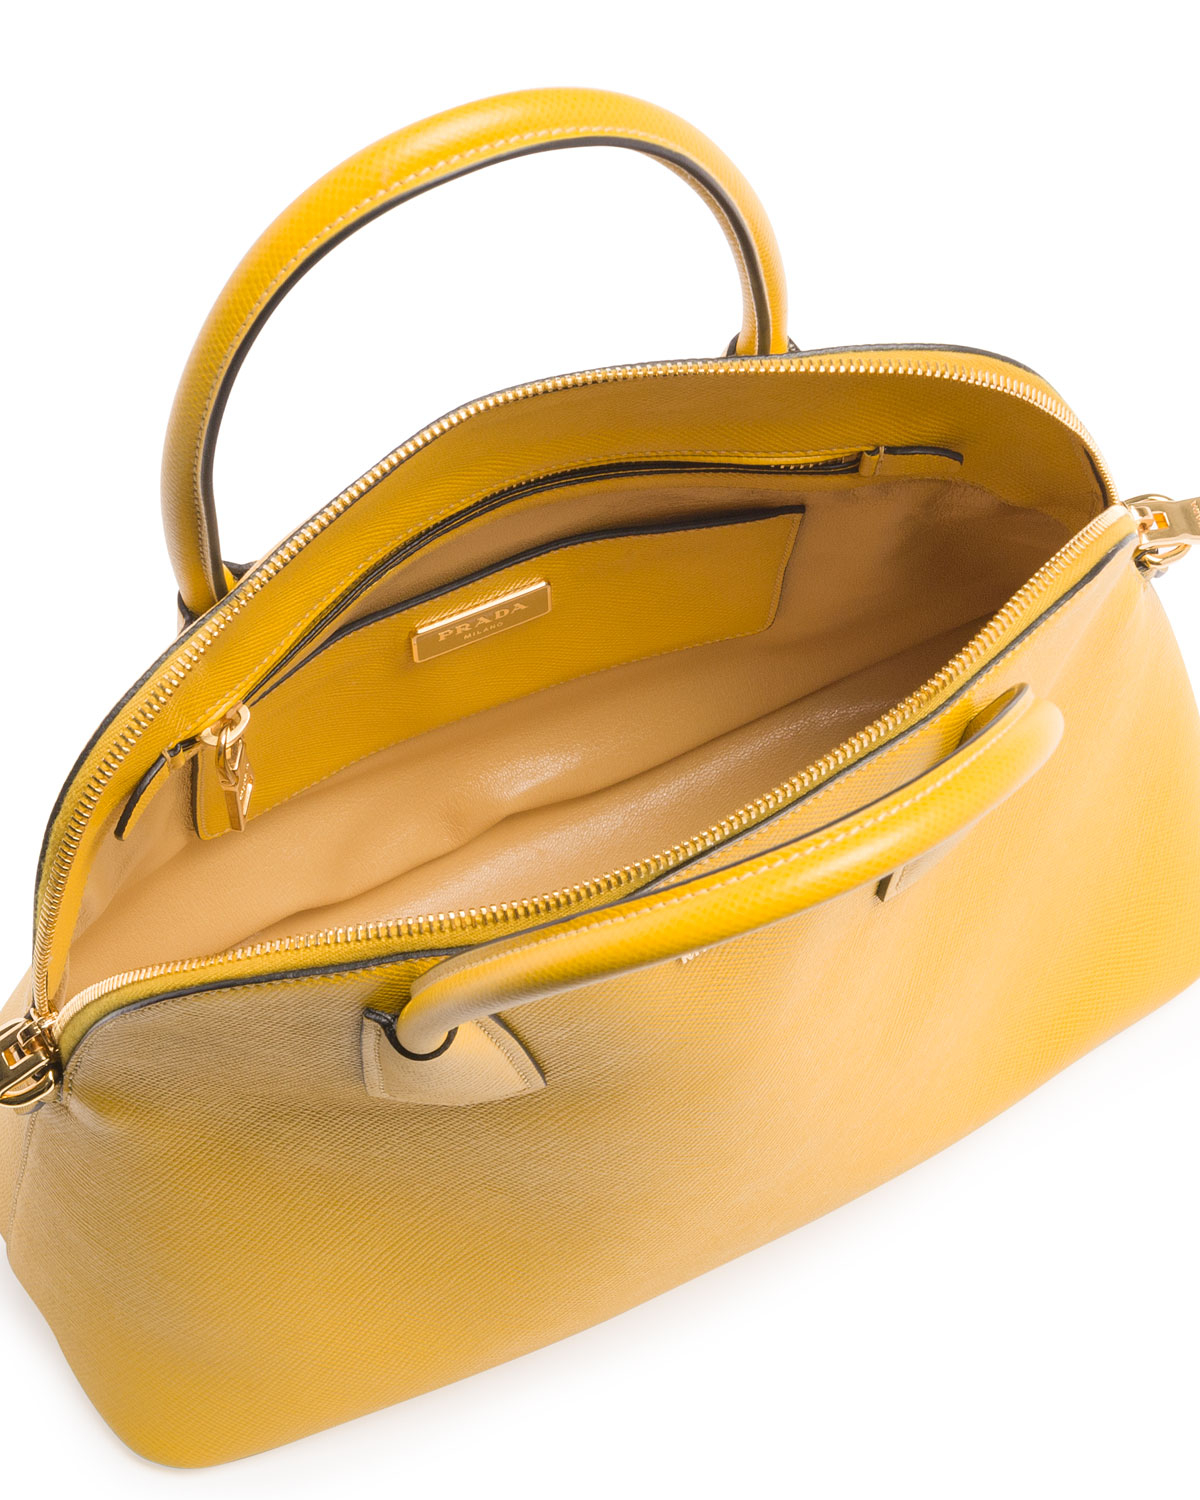 prada double handle tote - Prada Saffiano Cuir Dome Satchel Bag in Yellow (Yellow (Giallo ...